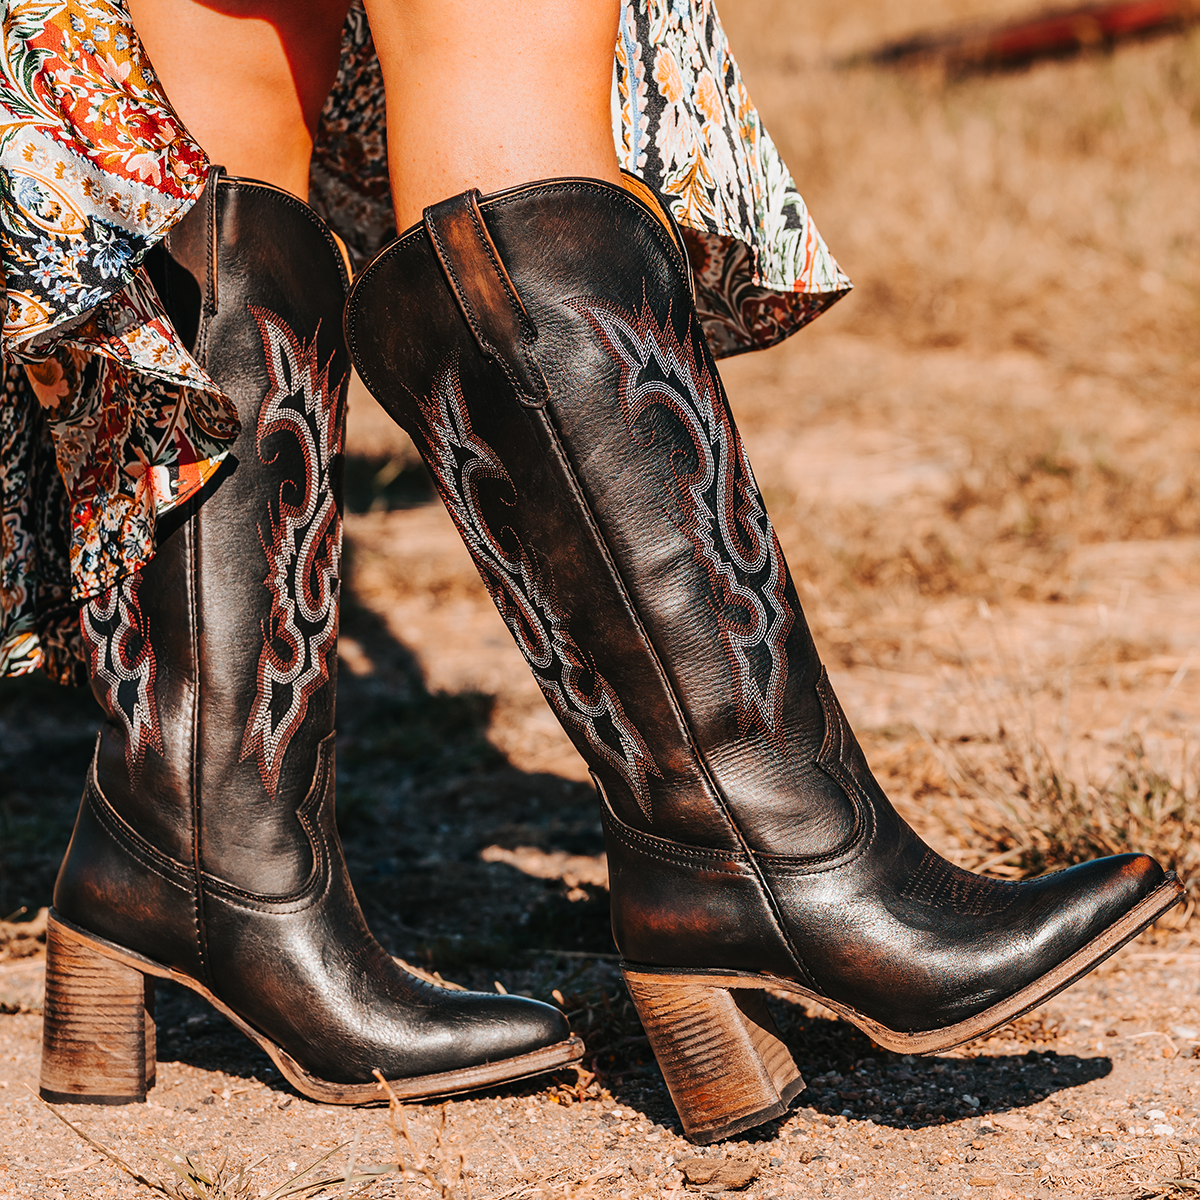 FREEBIRD women's Jackson black leather high heel western boot with stitch detailing